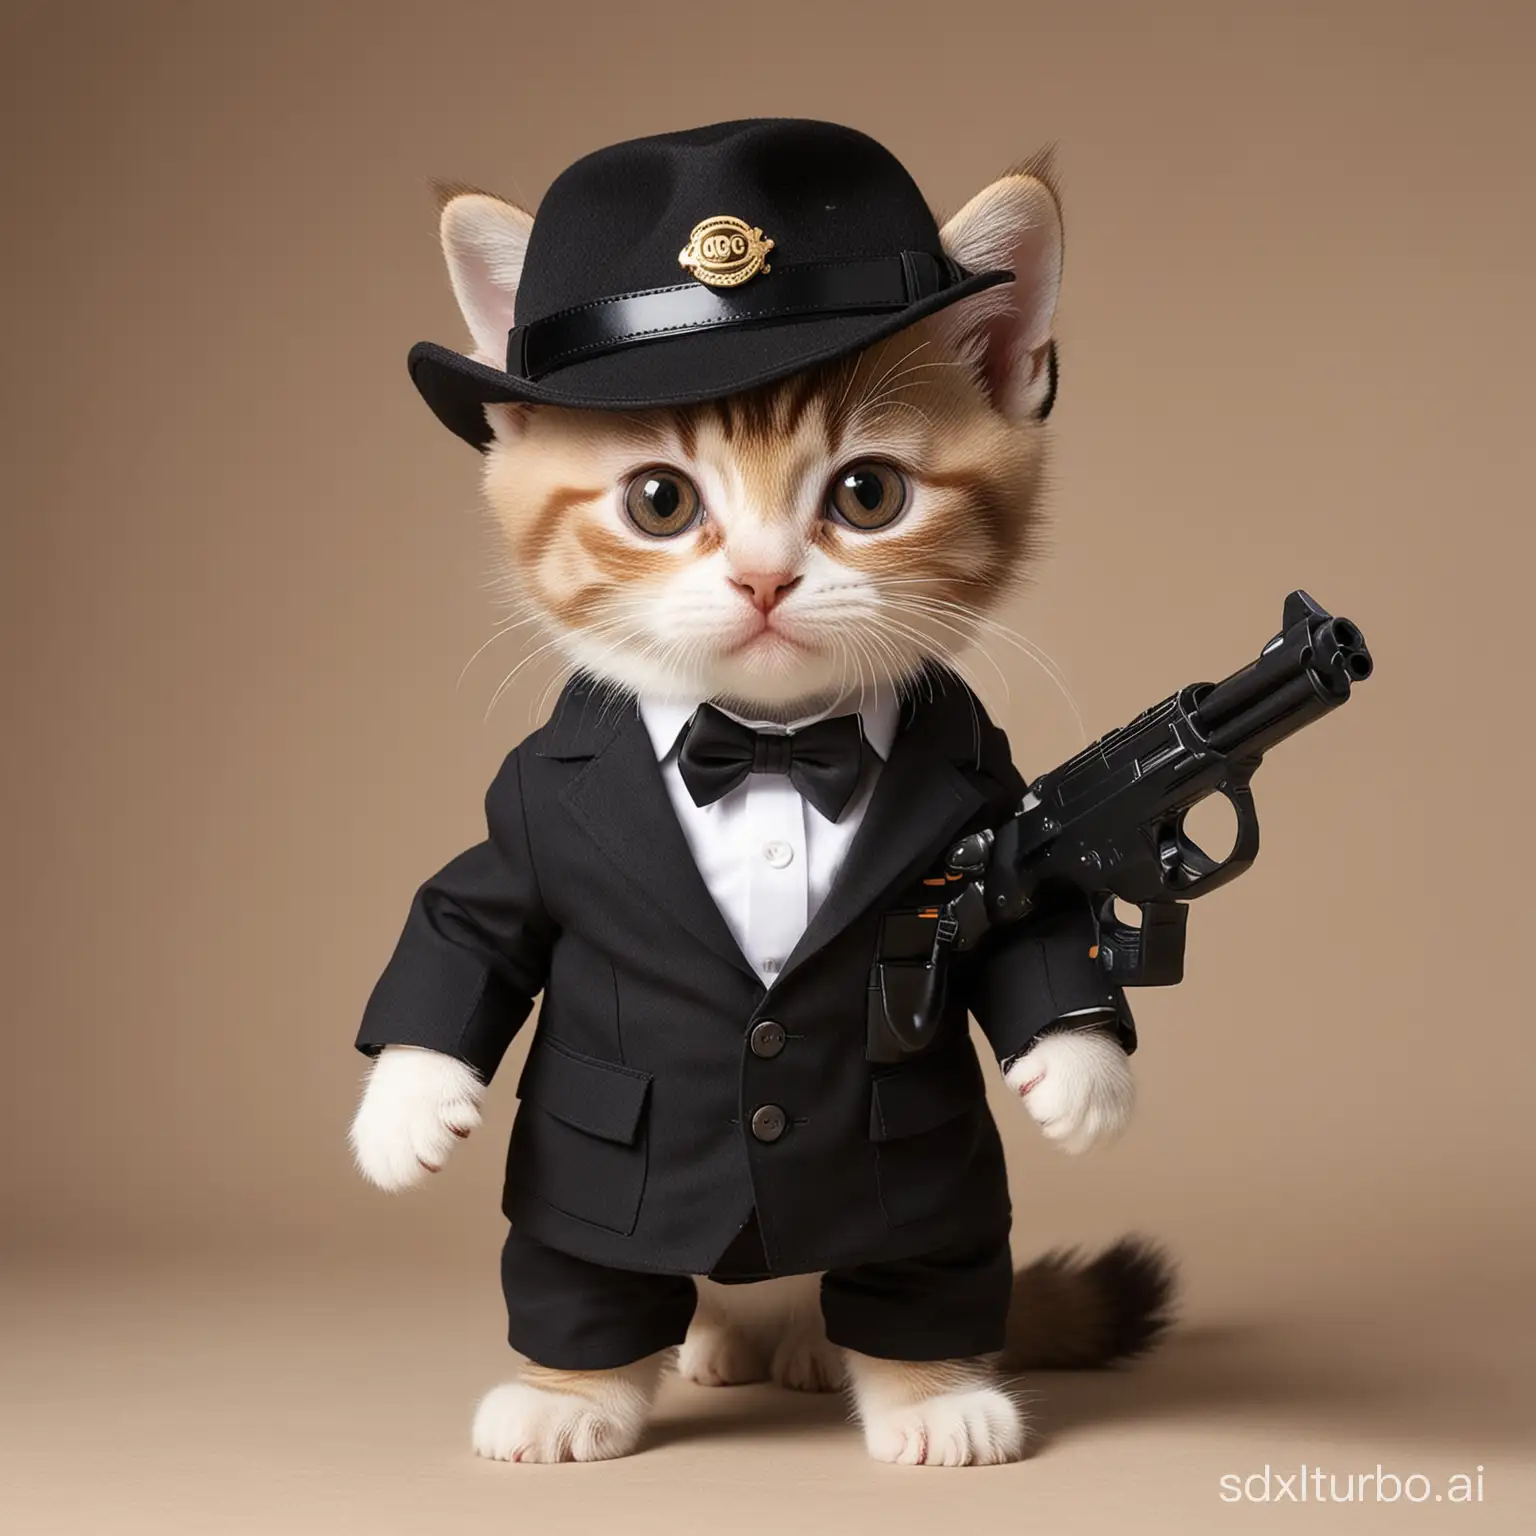 Anthropomorphic-Kitten-Cosplaying-as-Agent-007